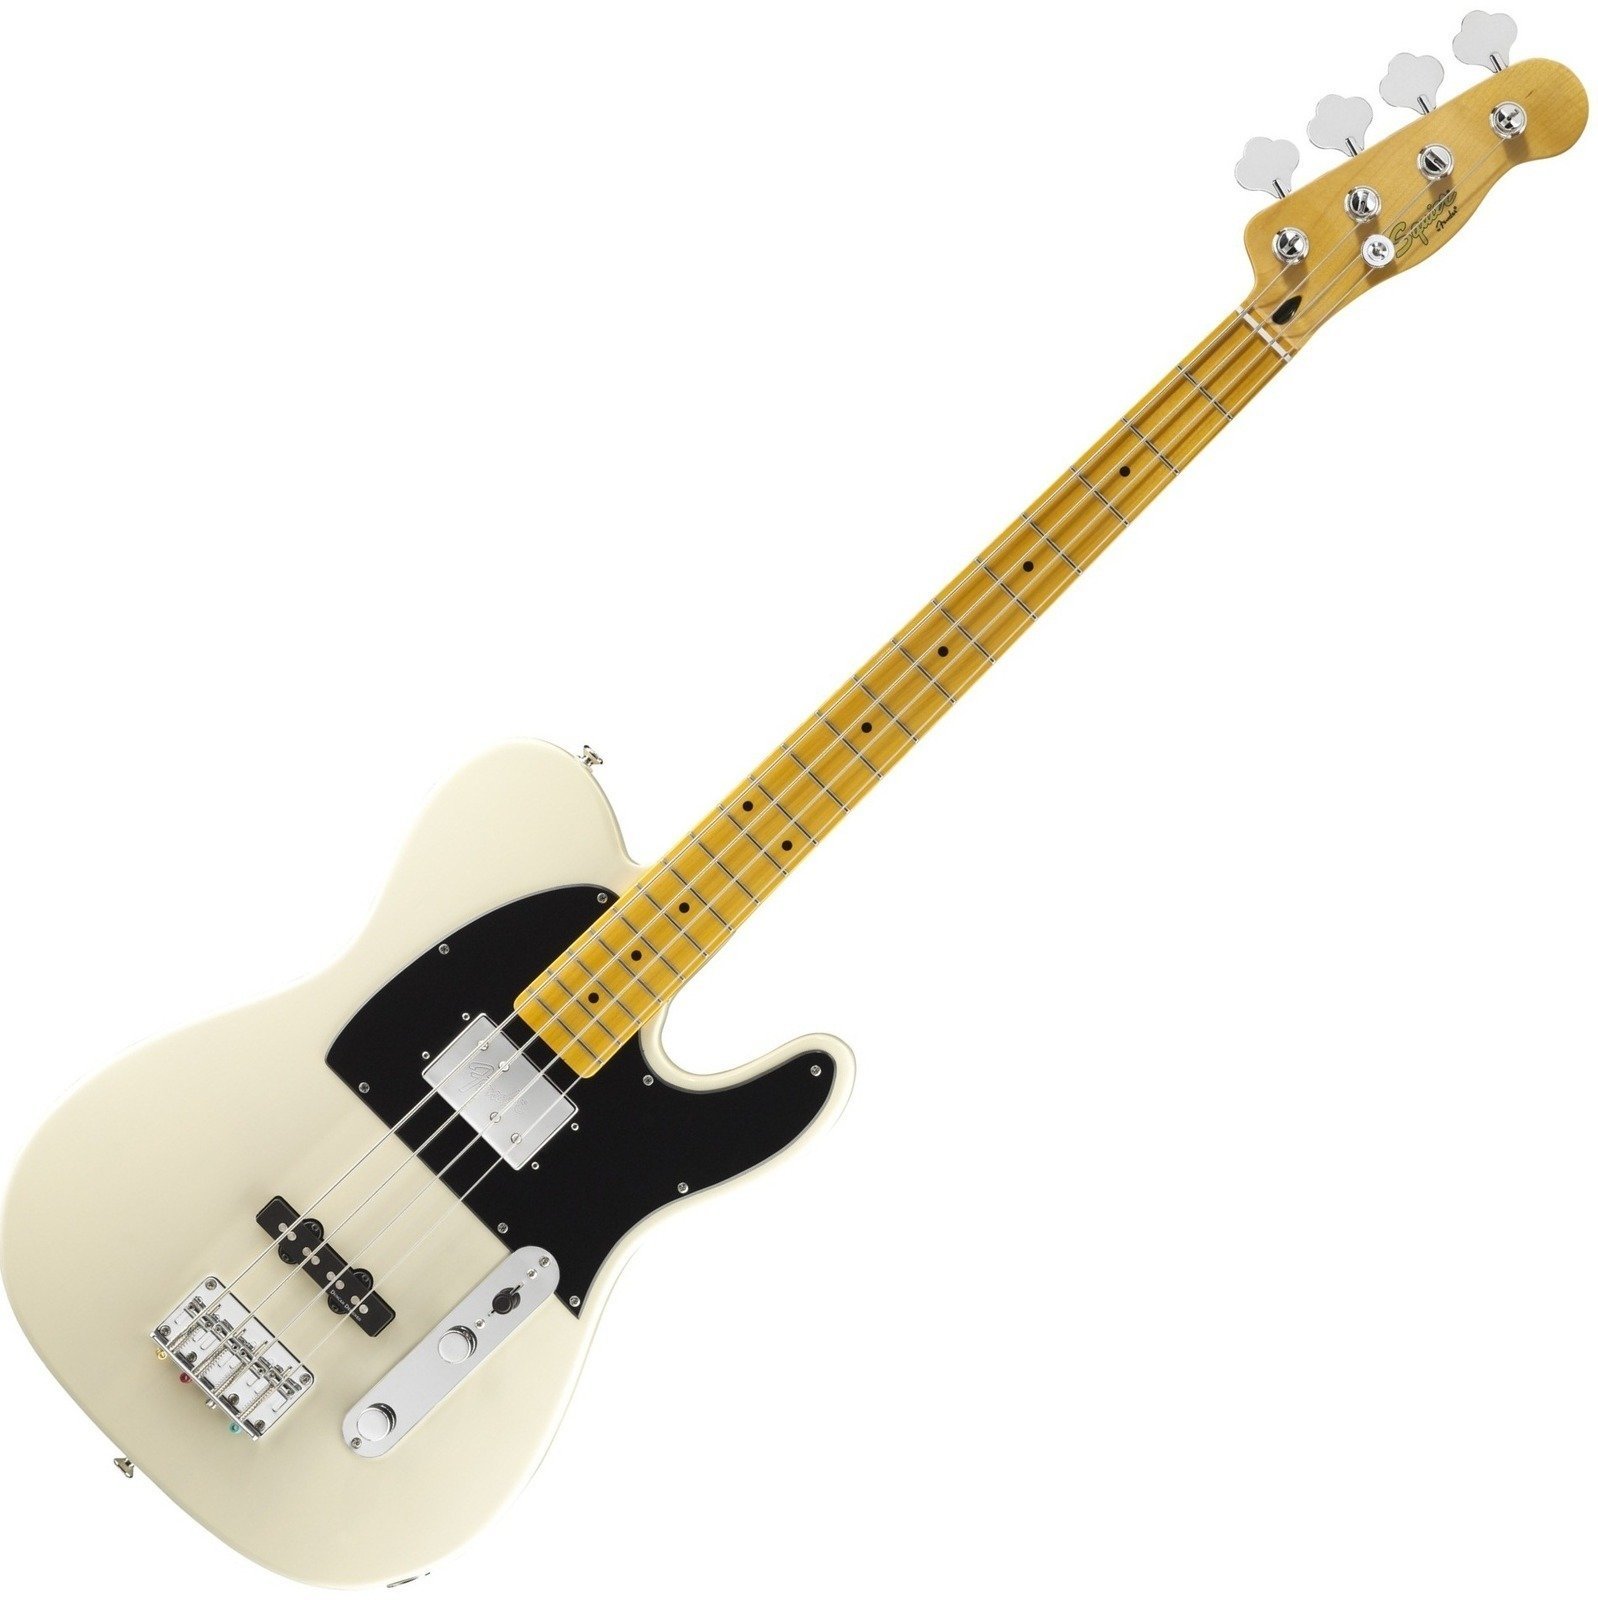 Baixo de 4 cordas Fender Squier Vintage Modified Telecaster Bass Special Vintage Blonde